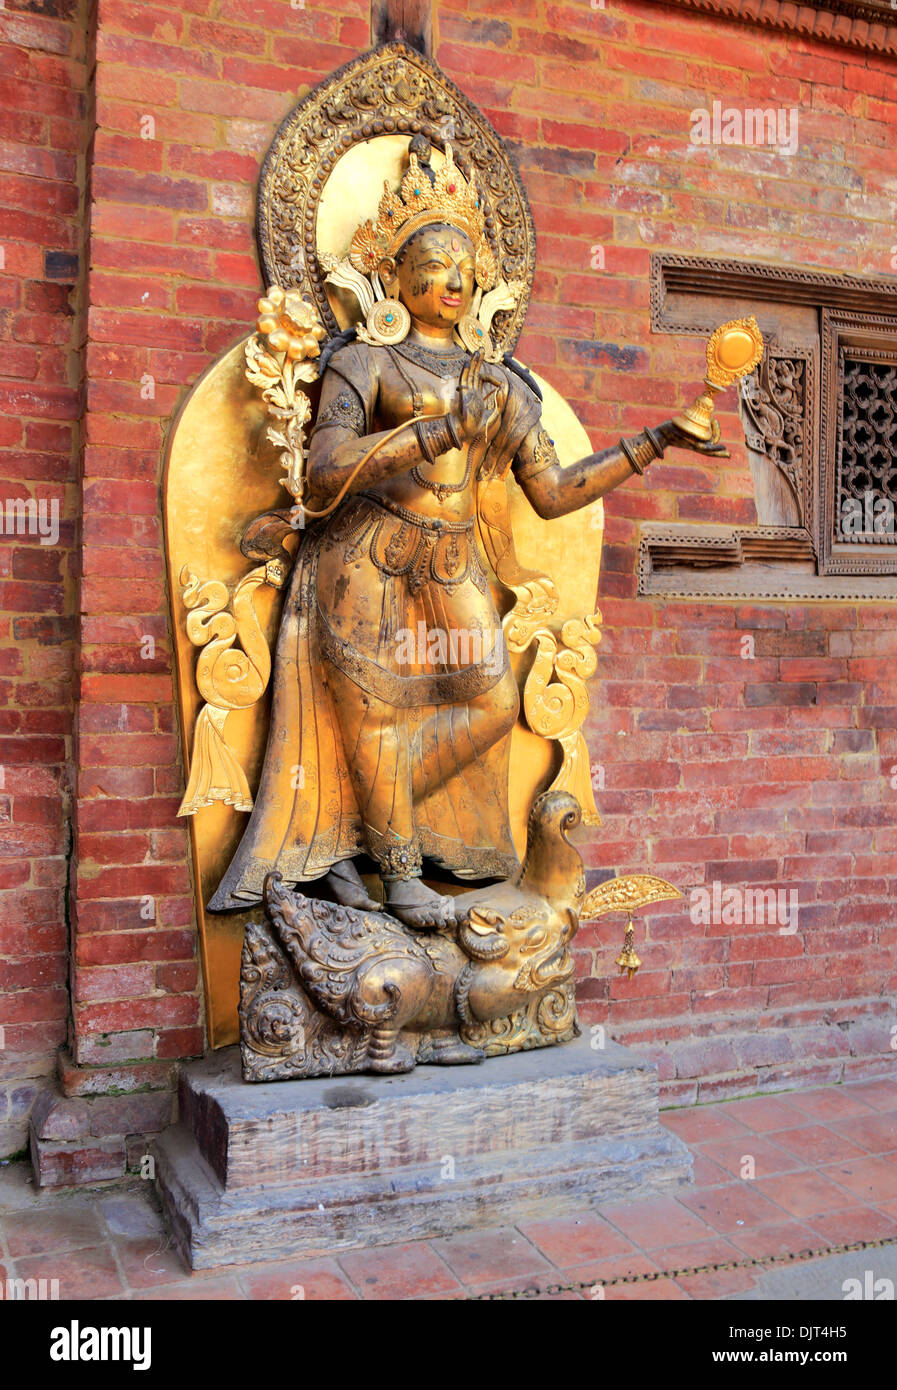 Goddess statue, Durbar Square, Patan, Lalitpur, Nepal Stock Photo